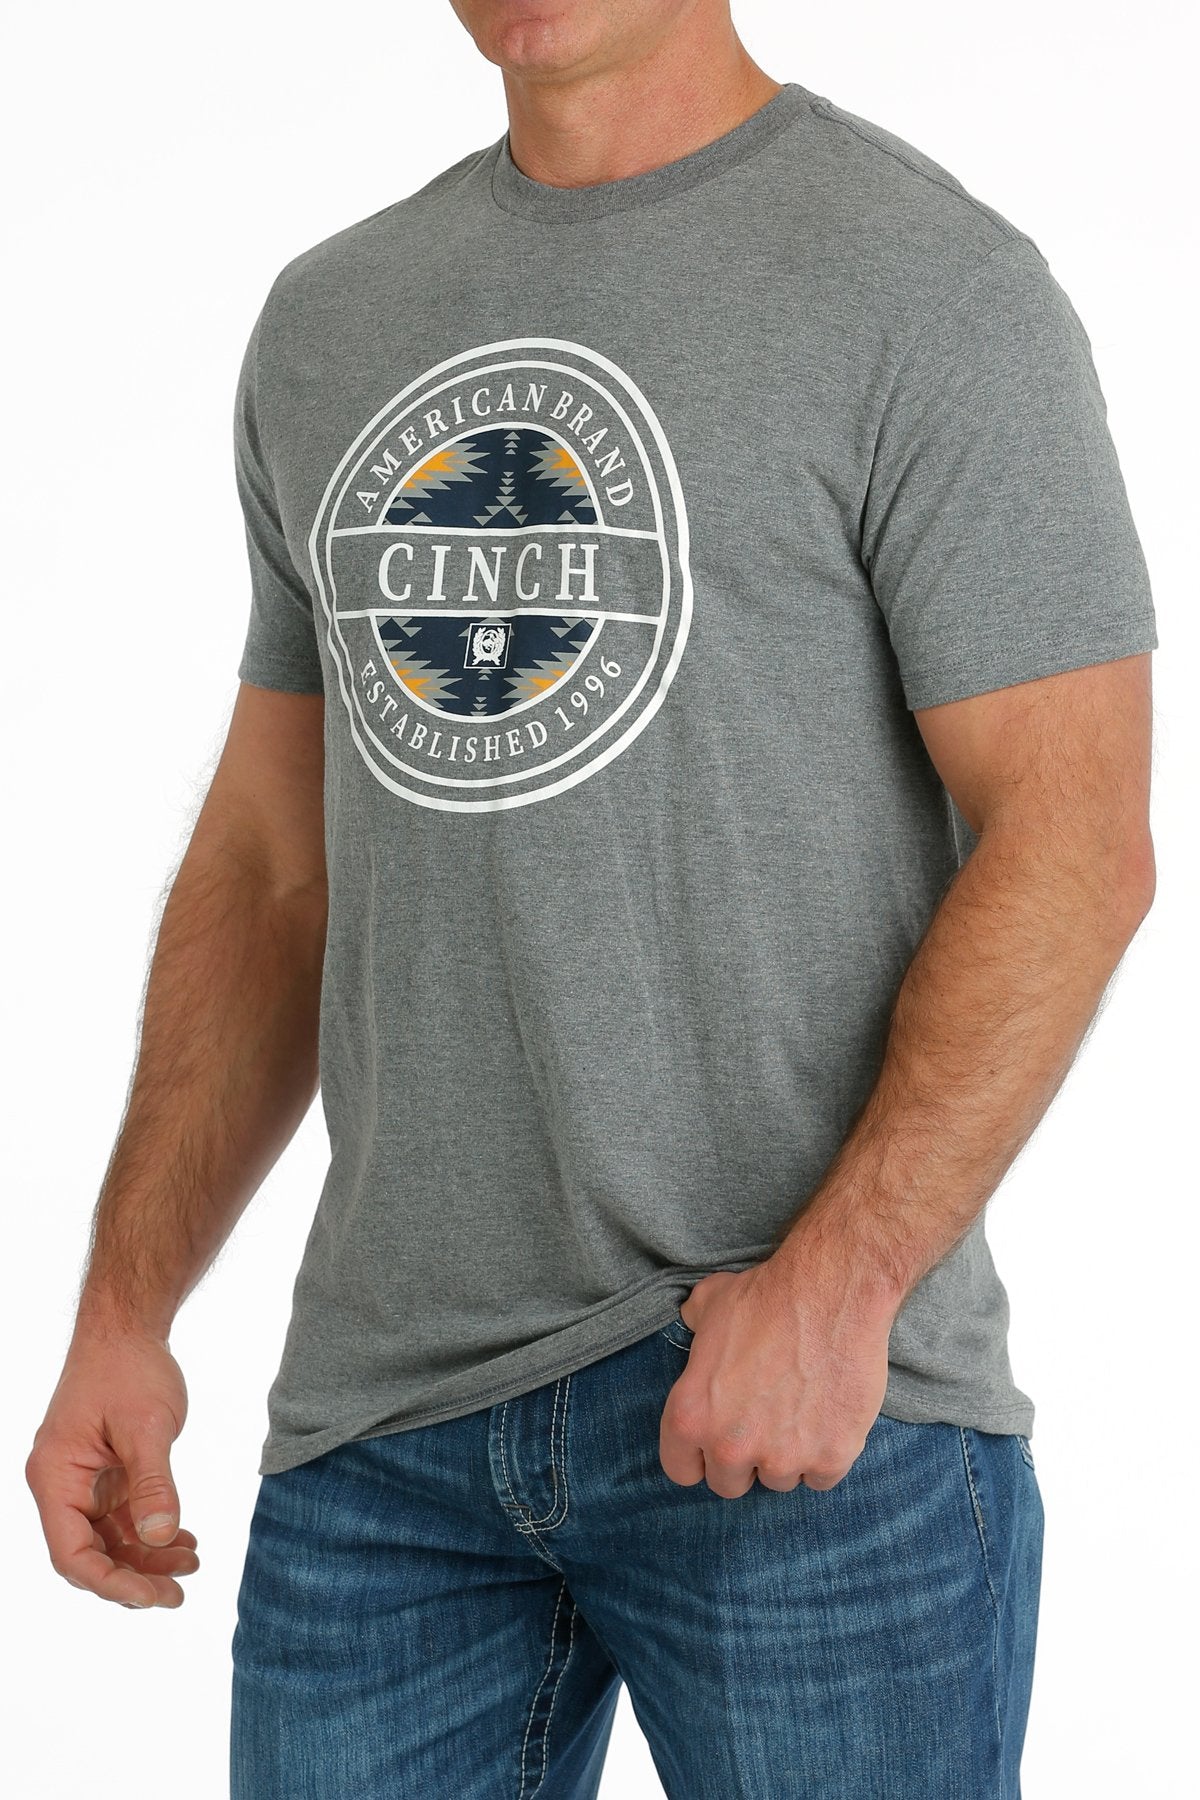 Cinch Men's American Brand Cinch T-Shirt in Gray